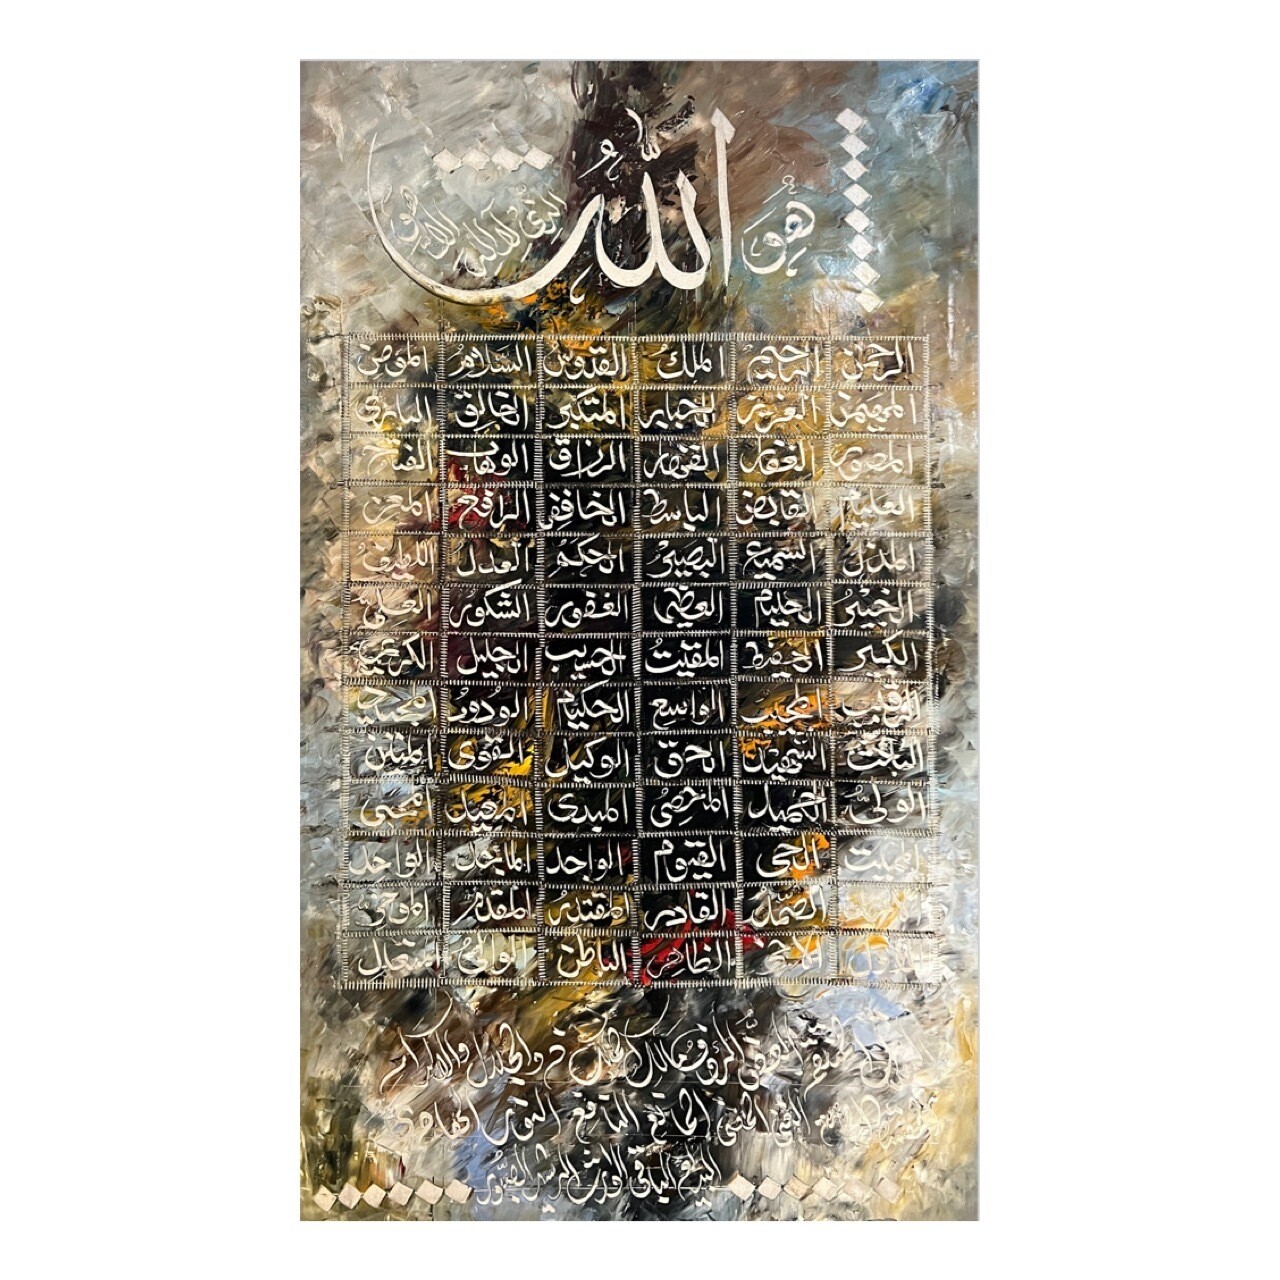 Asma al Husna 99 Names of Allah - Original hand engraved knife calligraphy painting